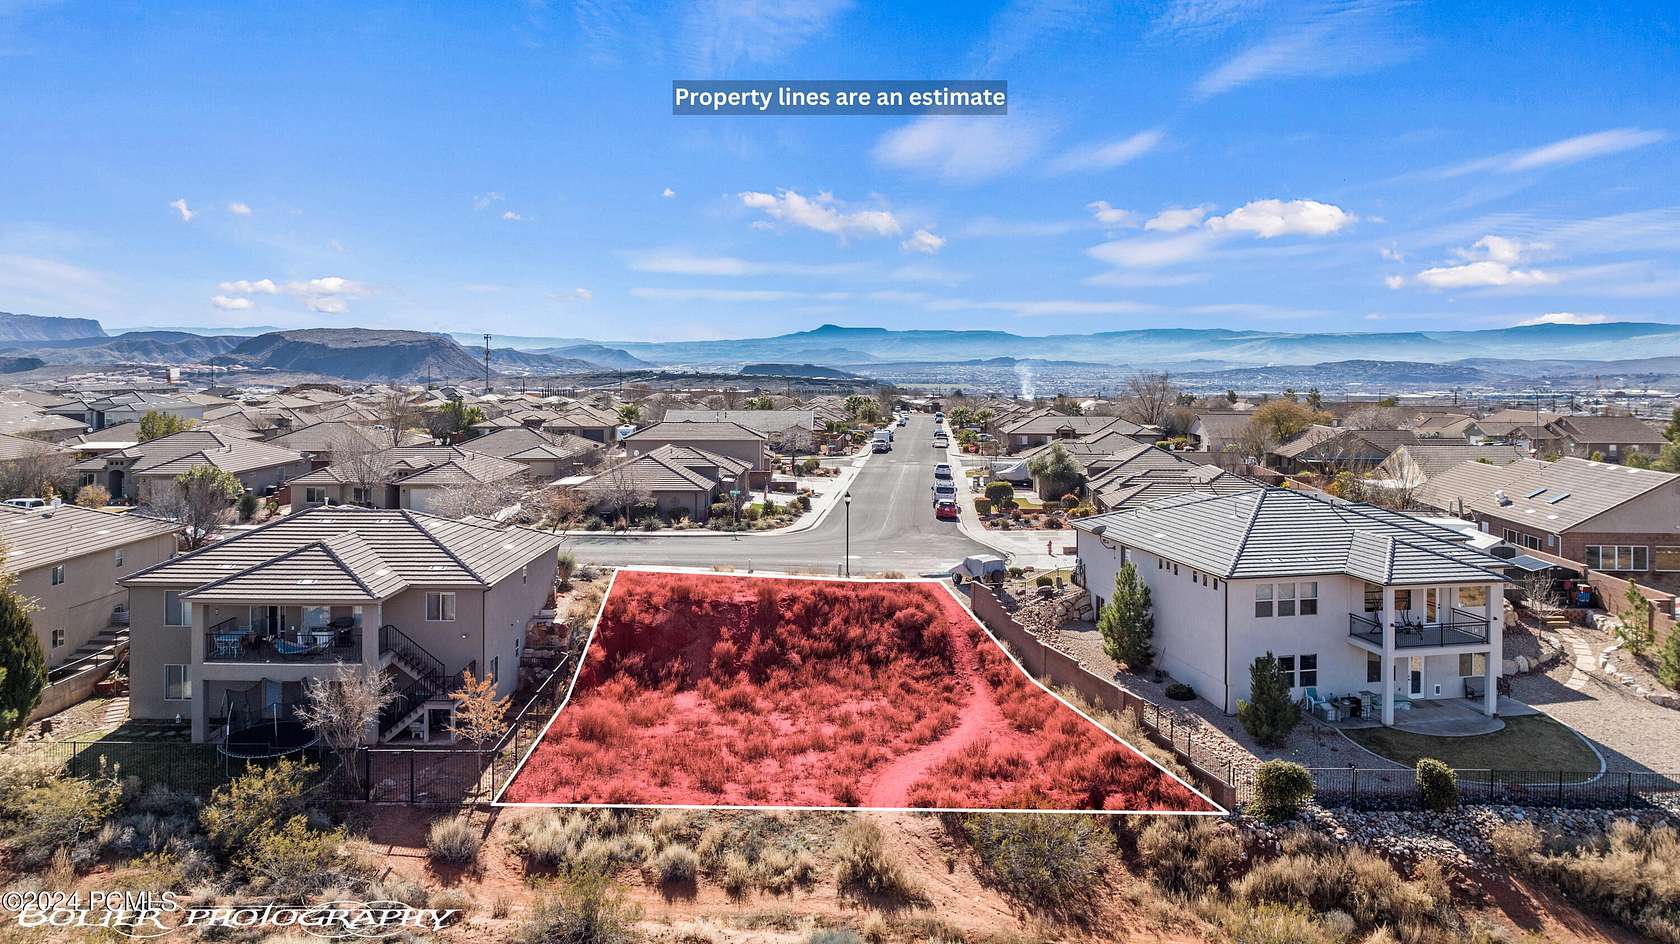 0.15 Acres of Residential Land for Sale in Washington, Utah